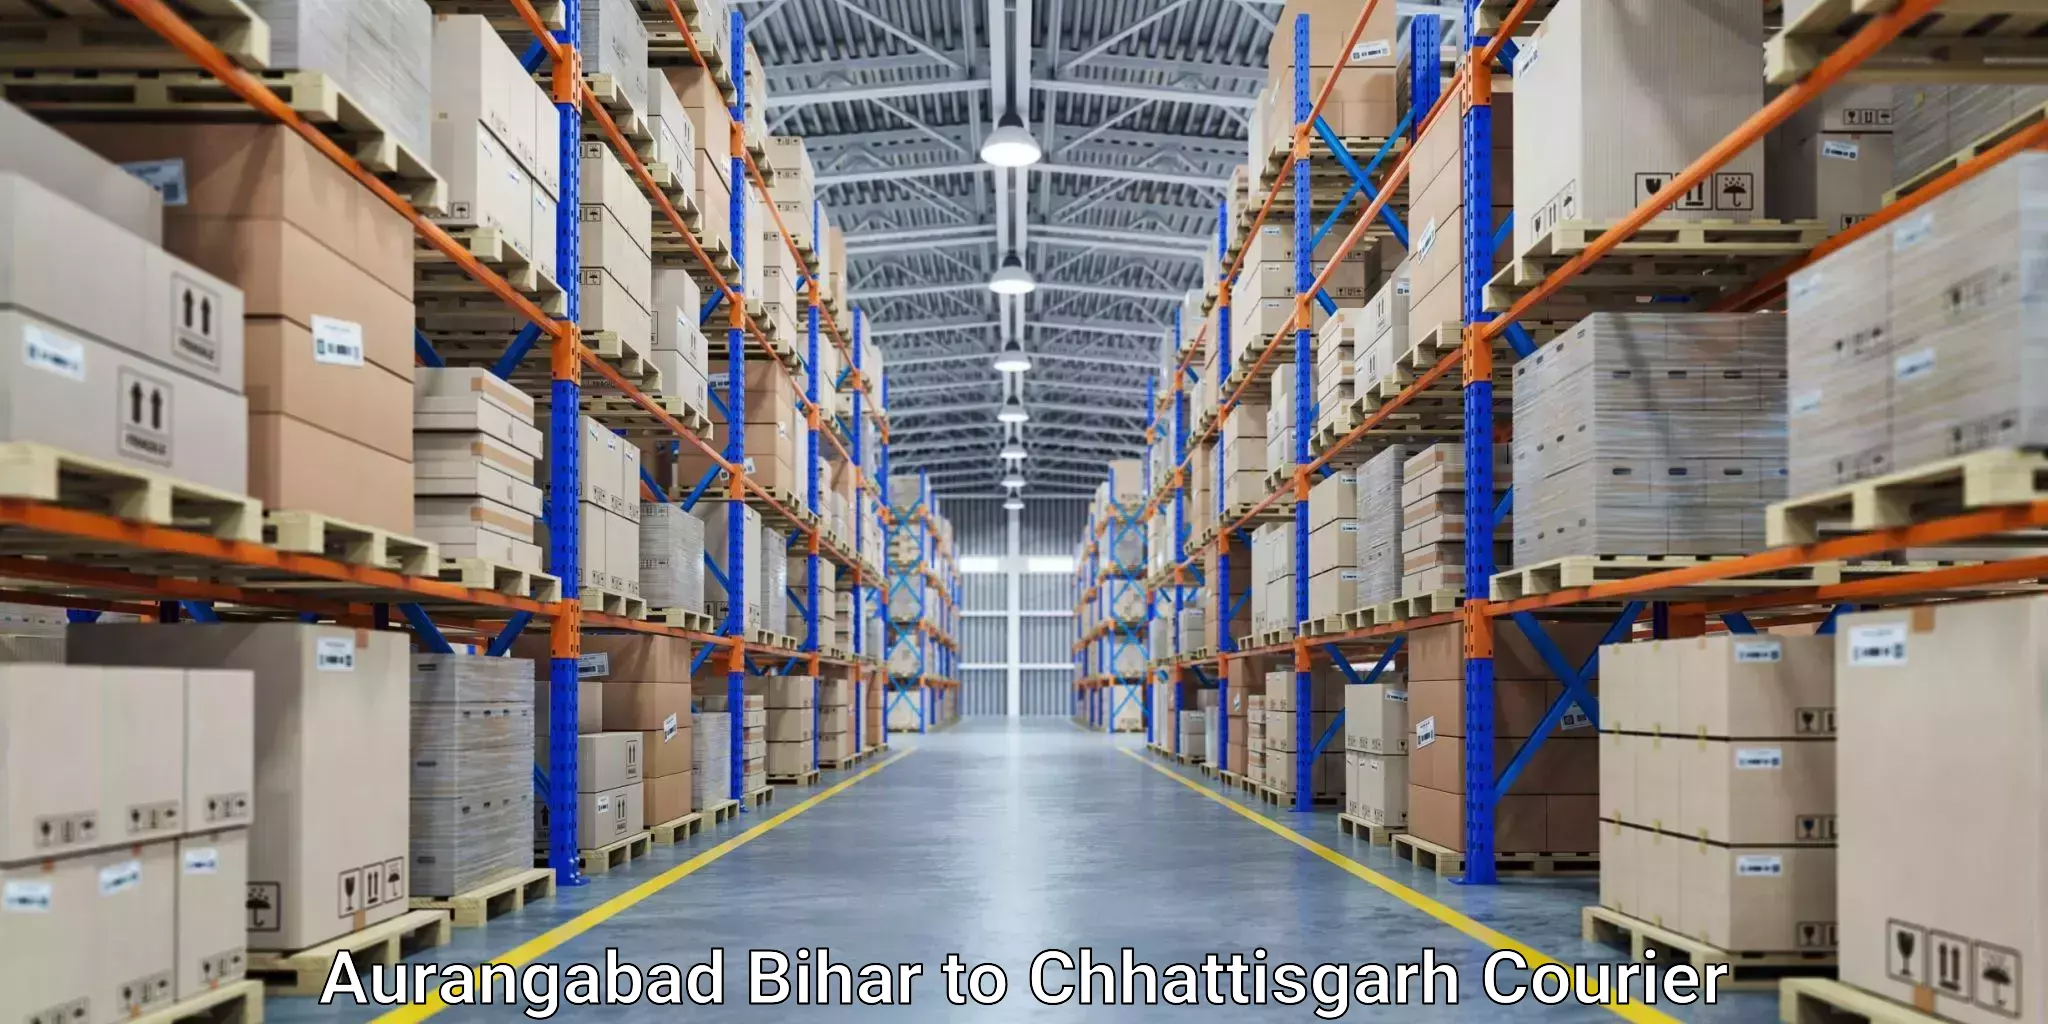 Urban courier service Aurangabad Bihar to Baramkela